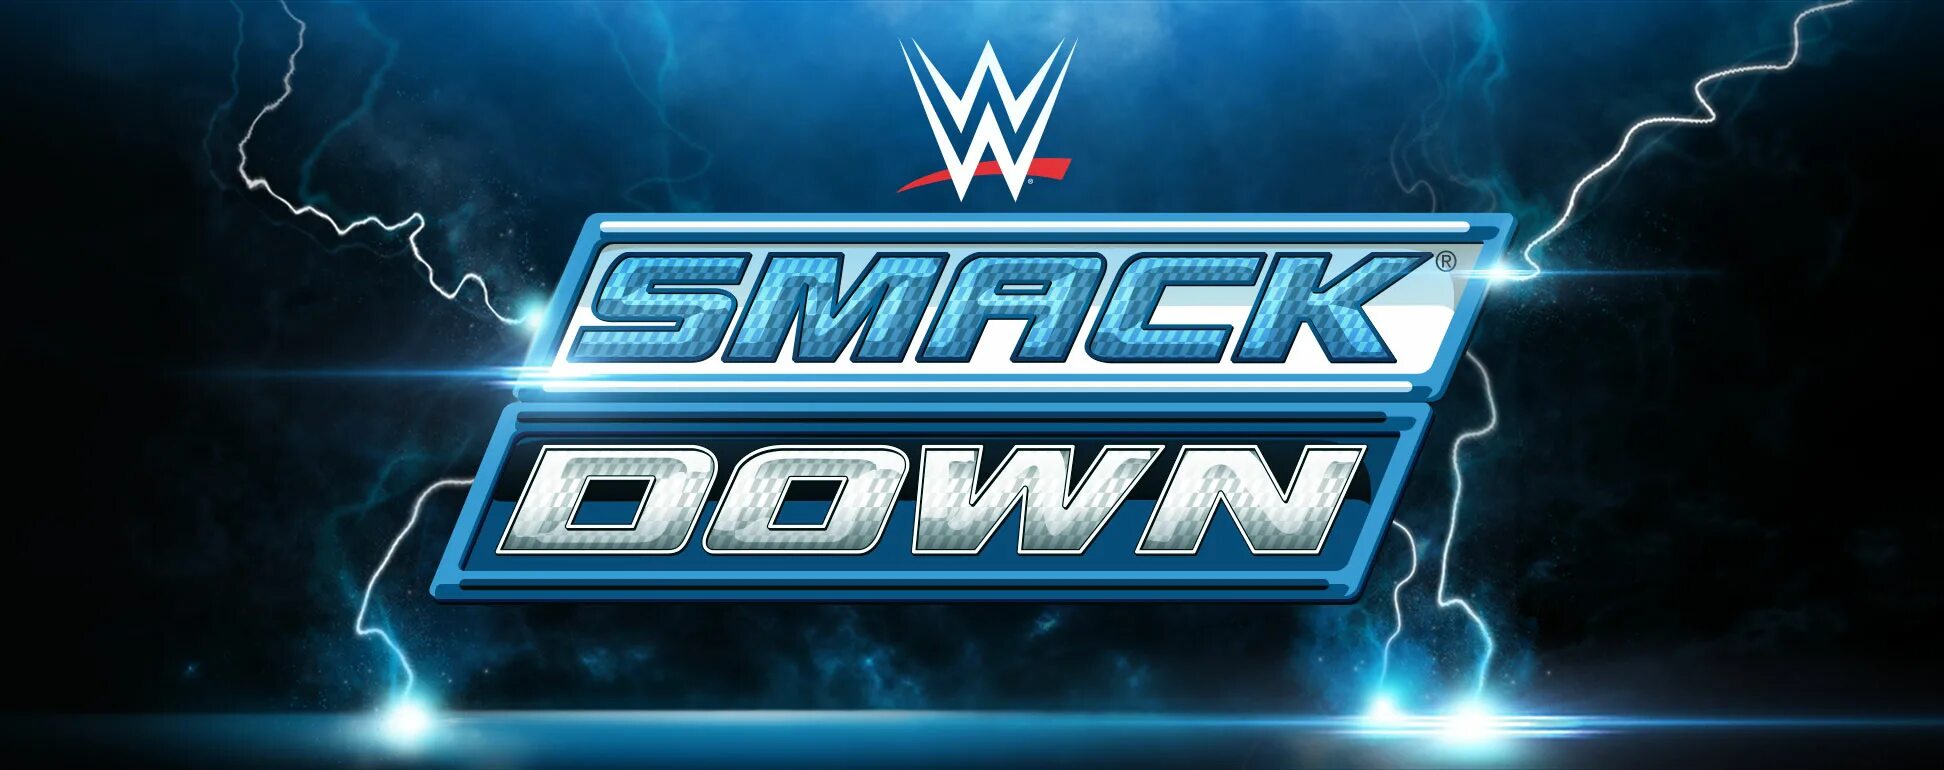 WWE SMACKDOWN. SMACKDOWN WWE SMACKDOWN. WWE SMACKDOWN logo. Картинка SMACKDOWN. Smack down